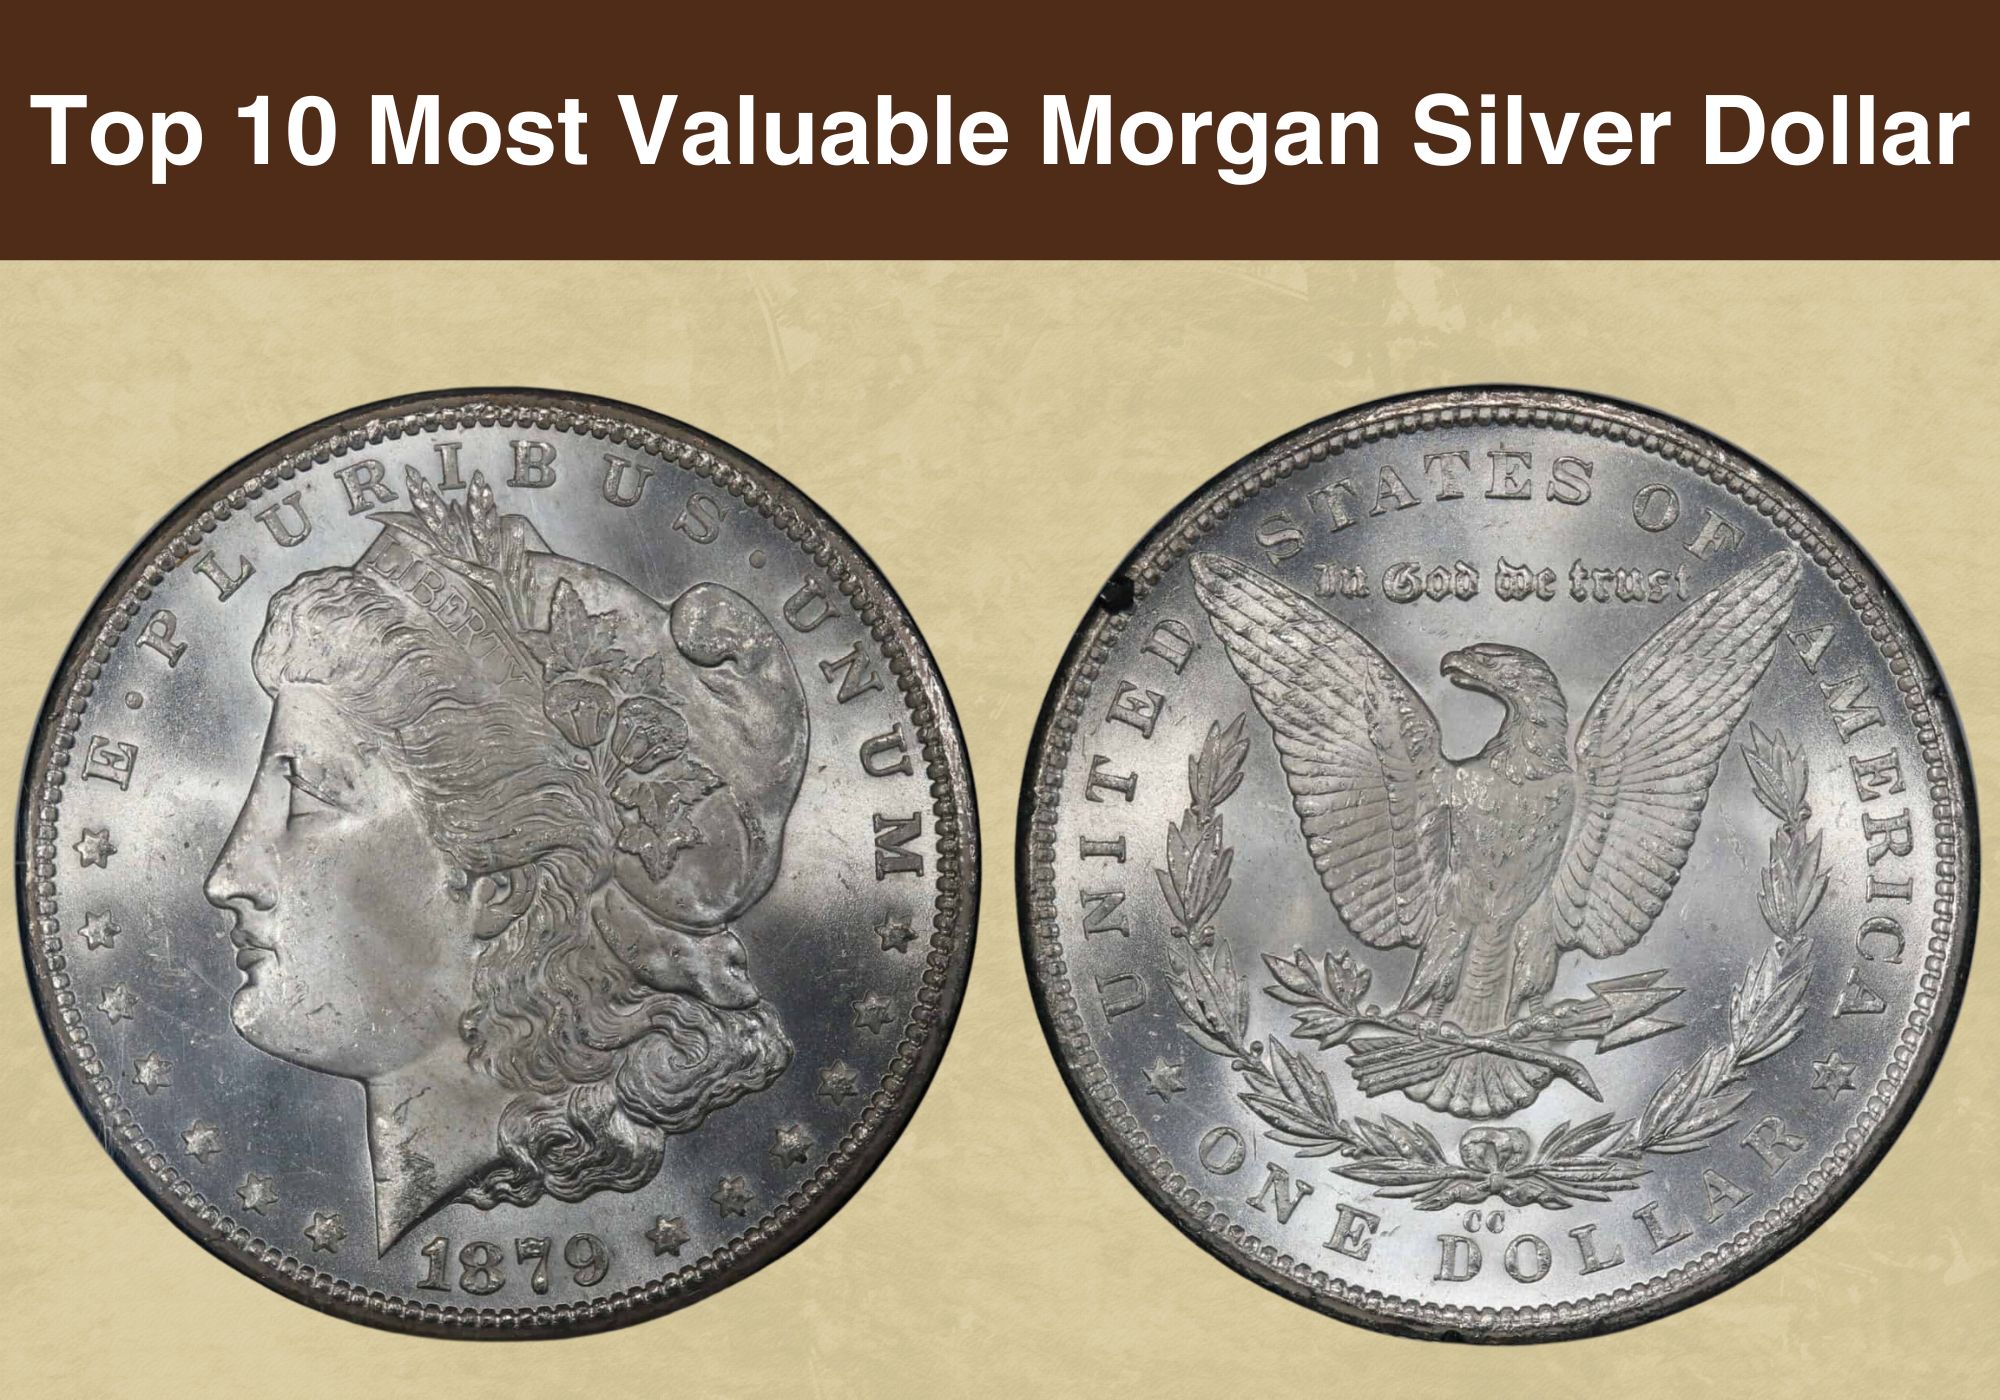 Top 10 Most Valuable Morgan Silver Dollar